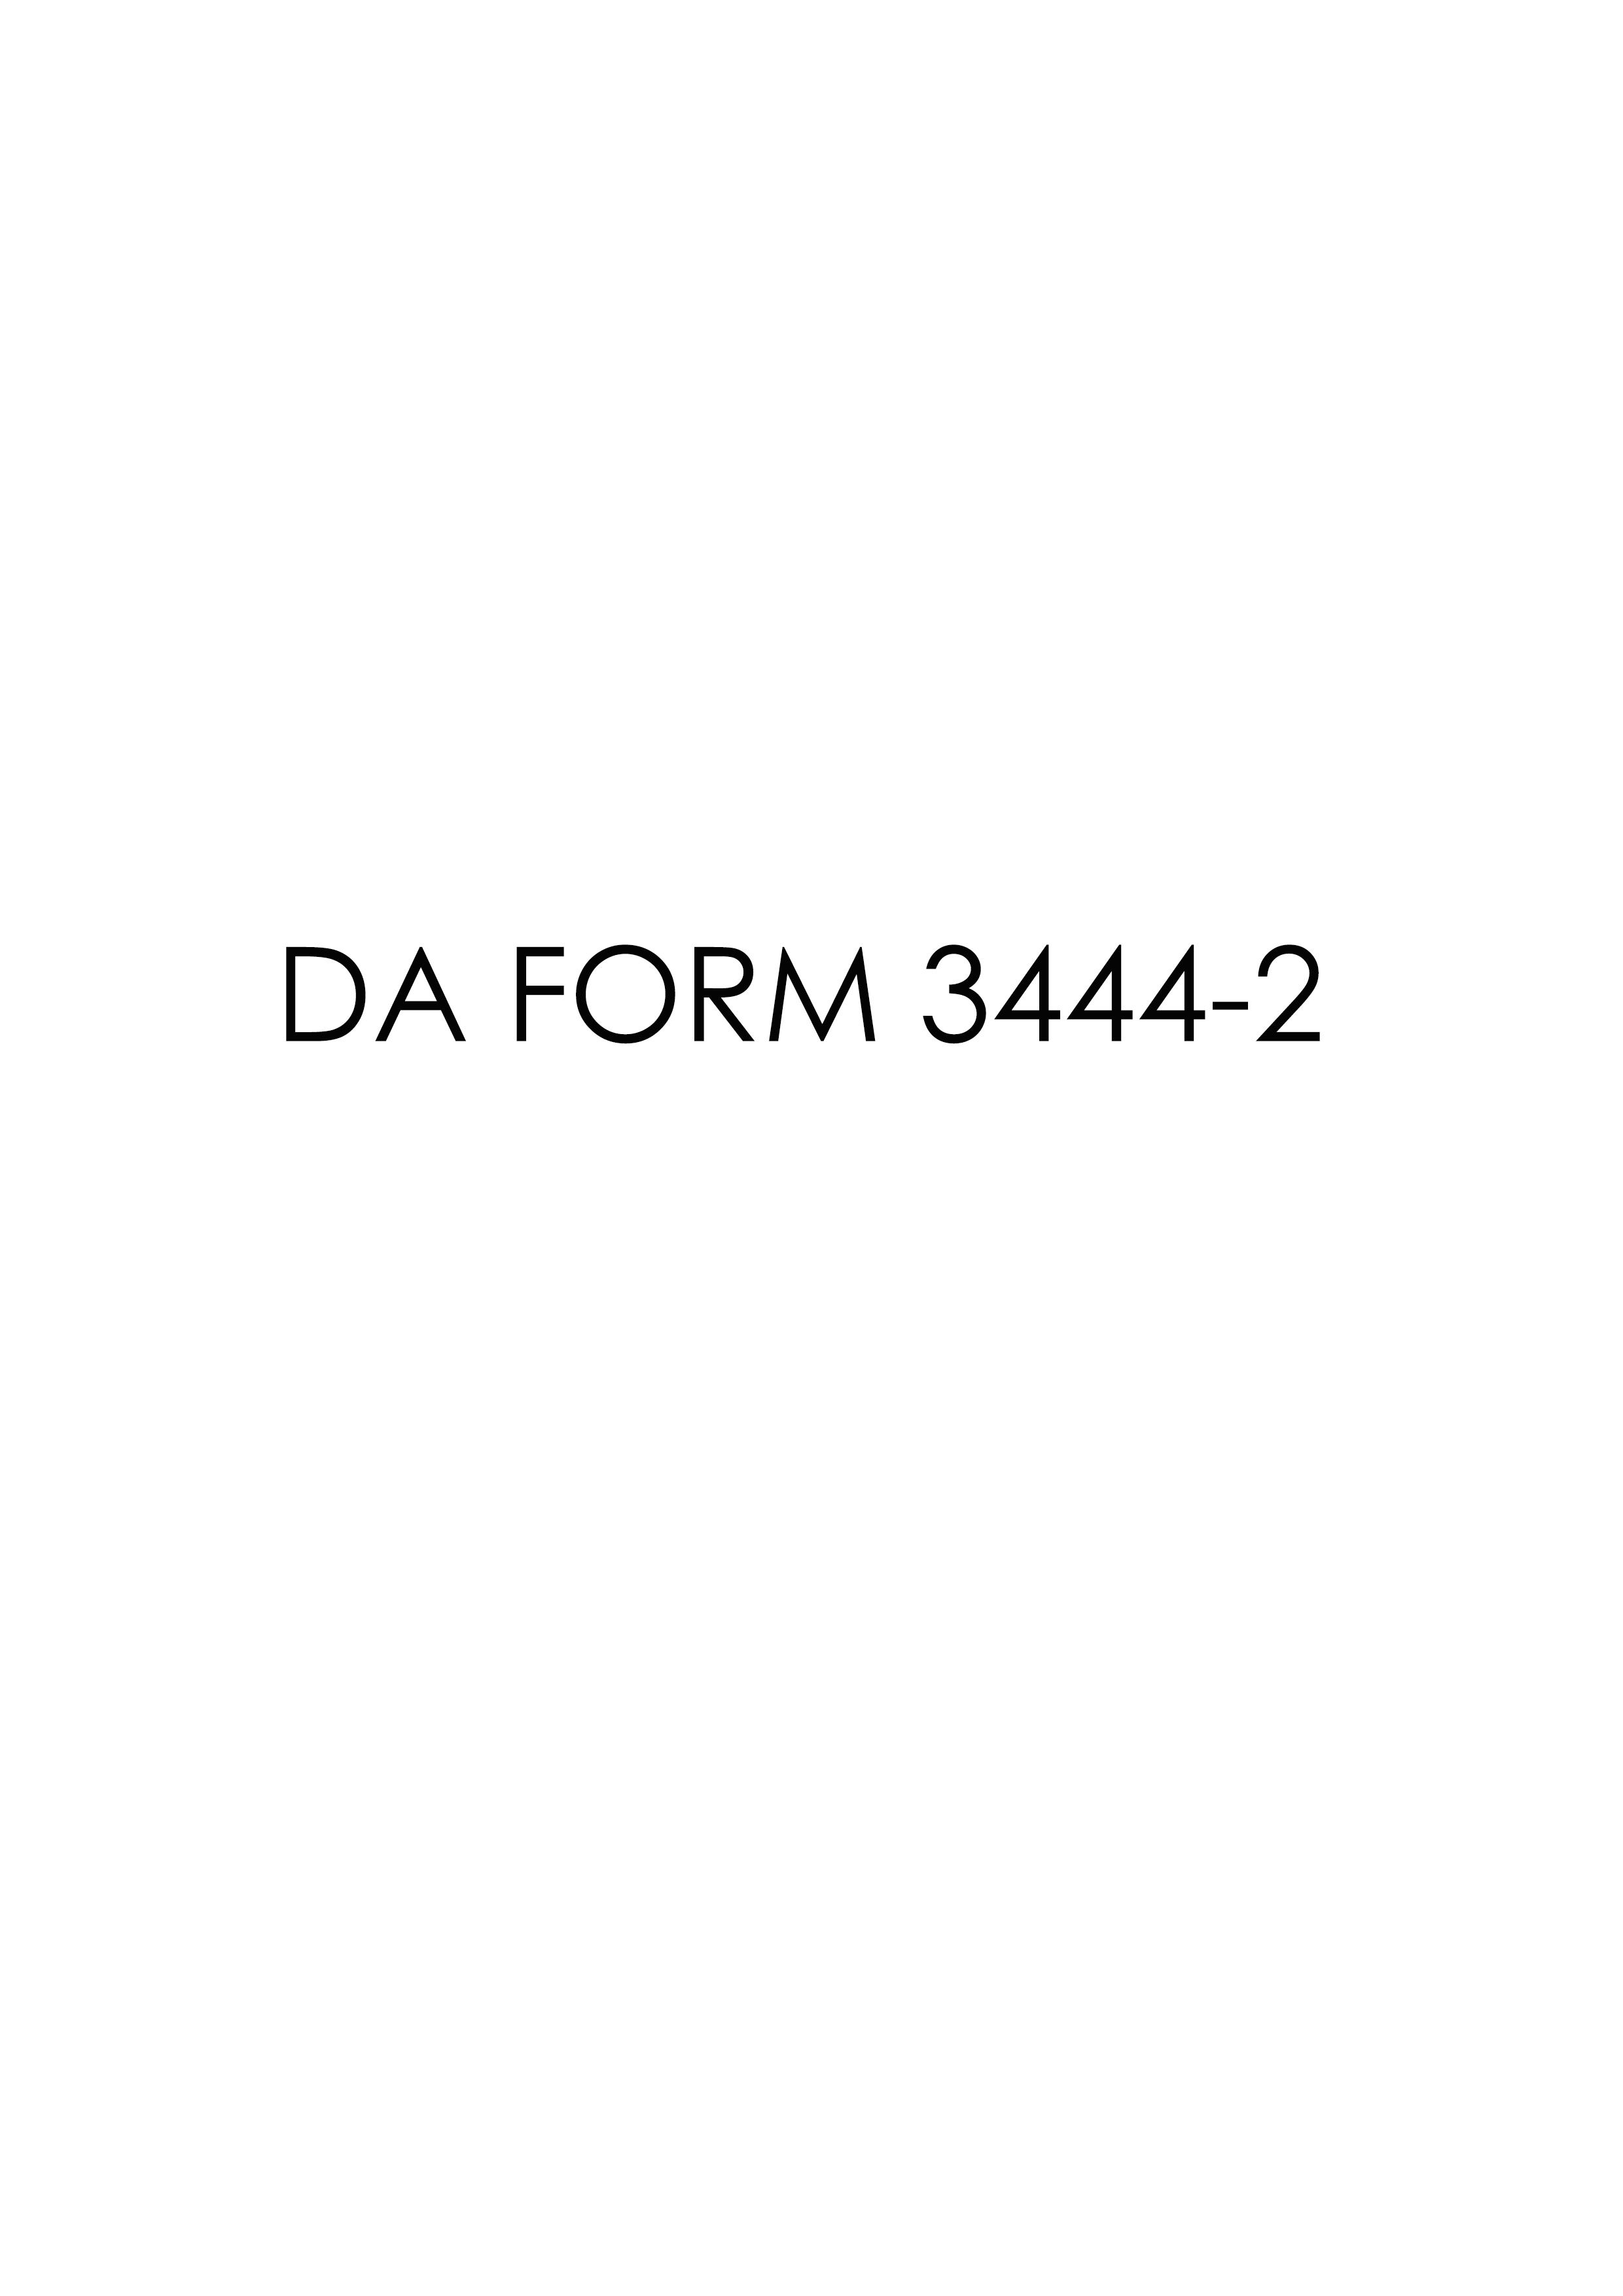 da Form 3444-2 fillable